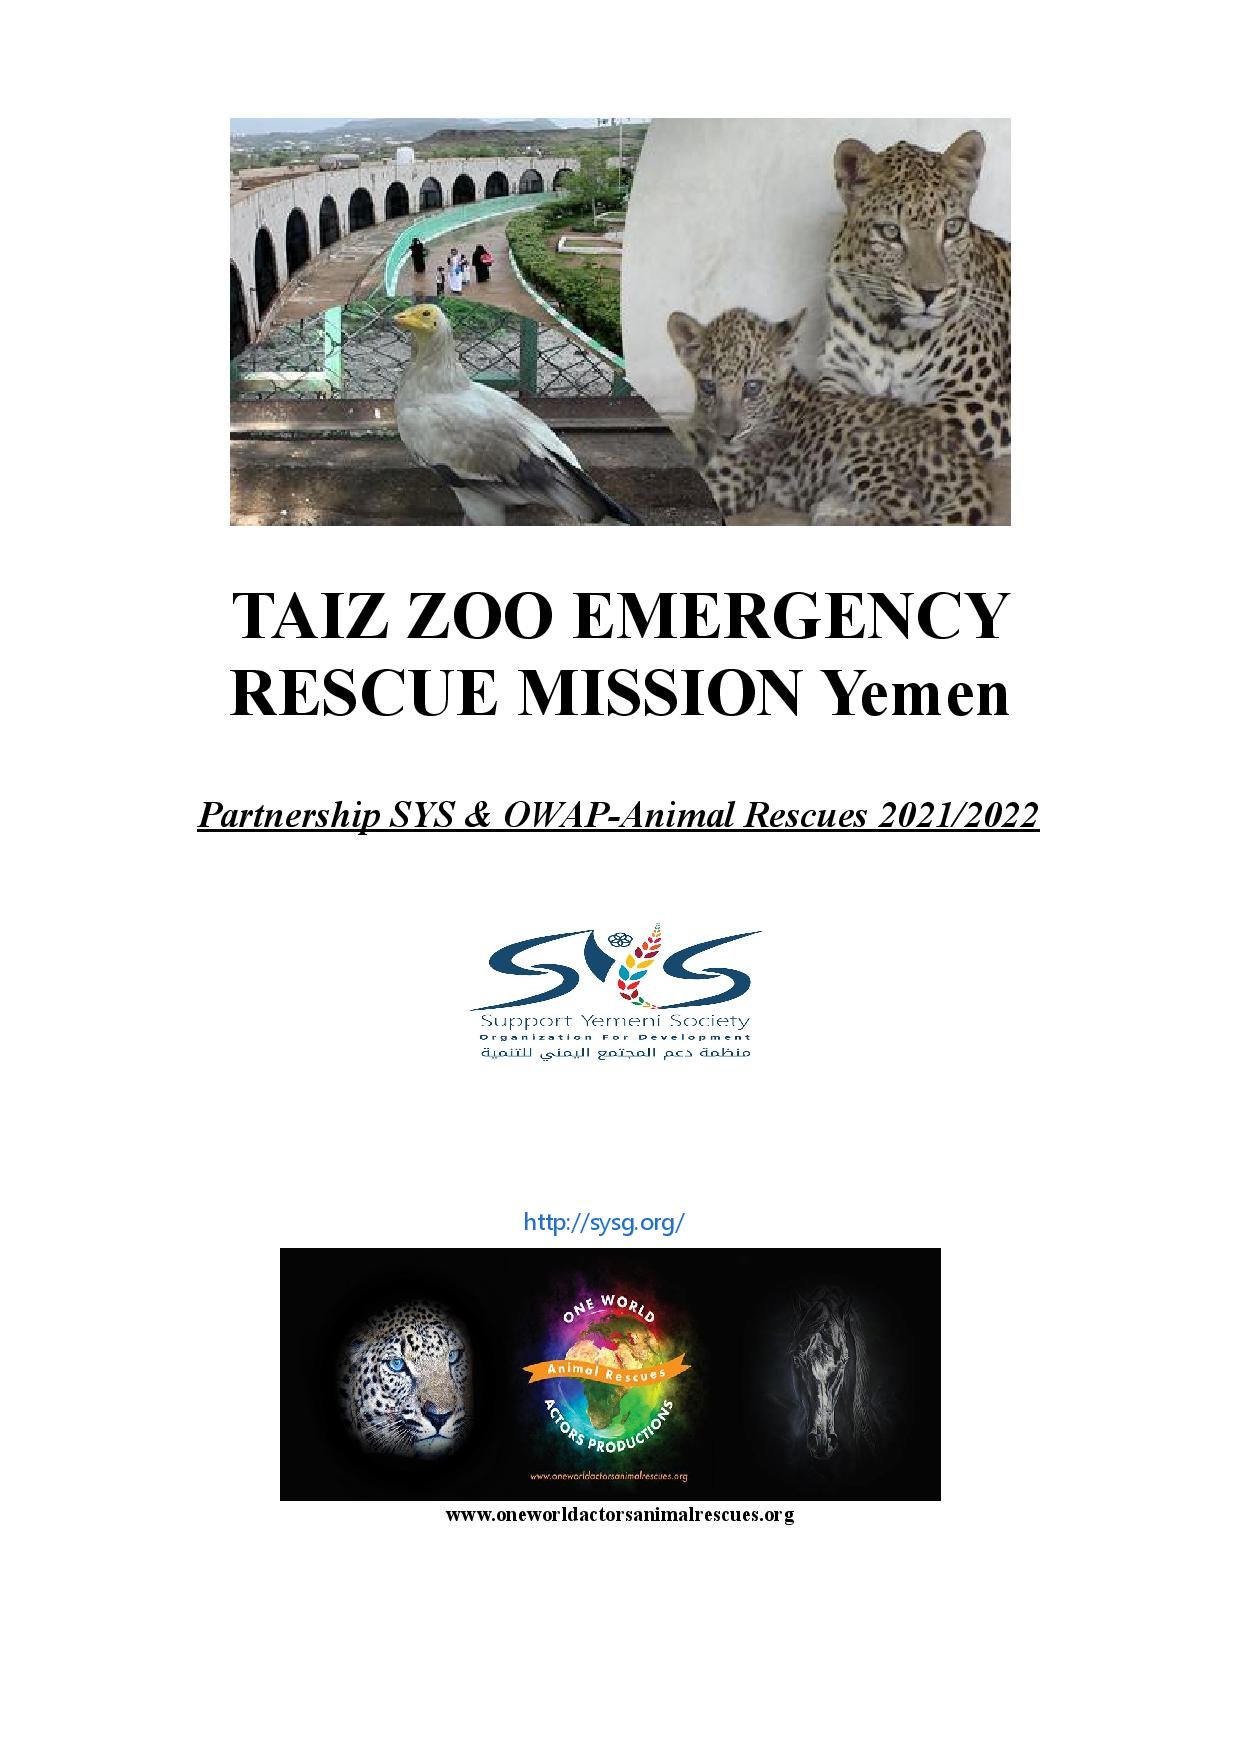 SYS OWAP Partnership agremeent Taiz Zoo Rescue Mission Memen 2021 2022 Signatures-page-001.jpg